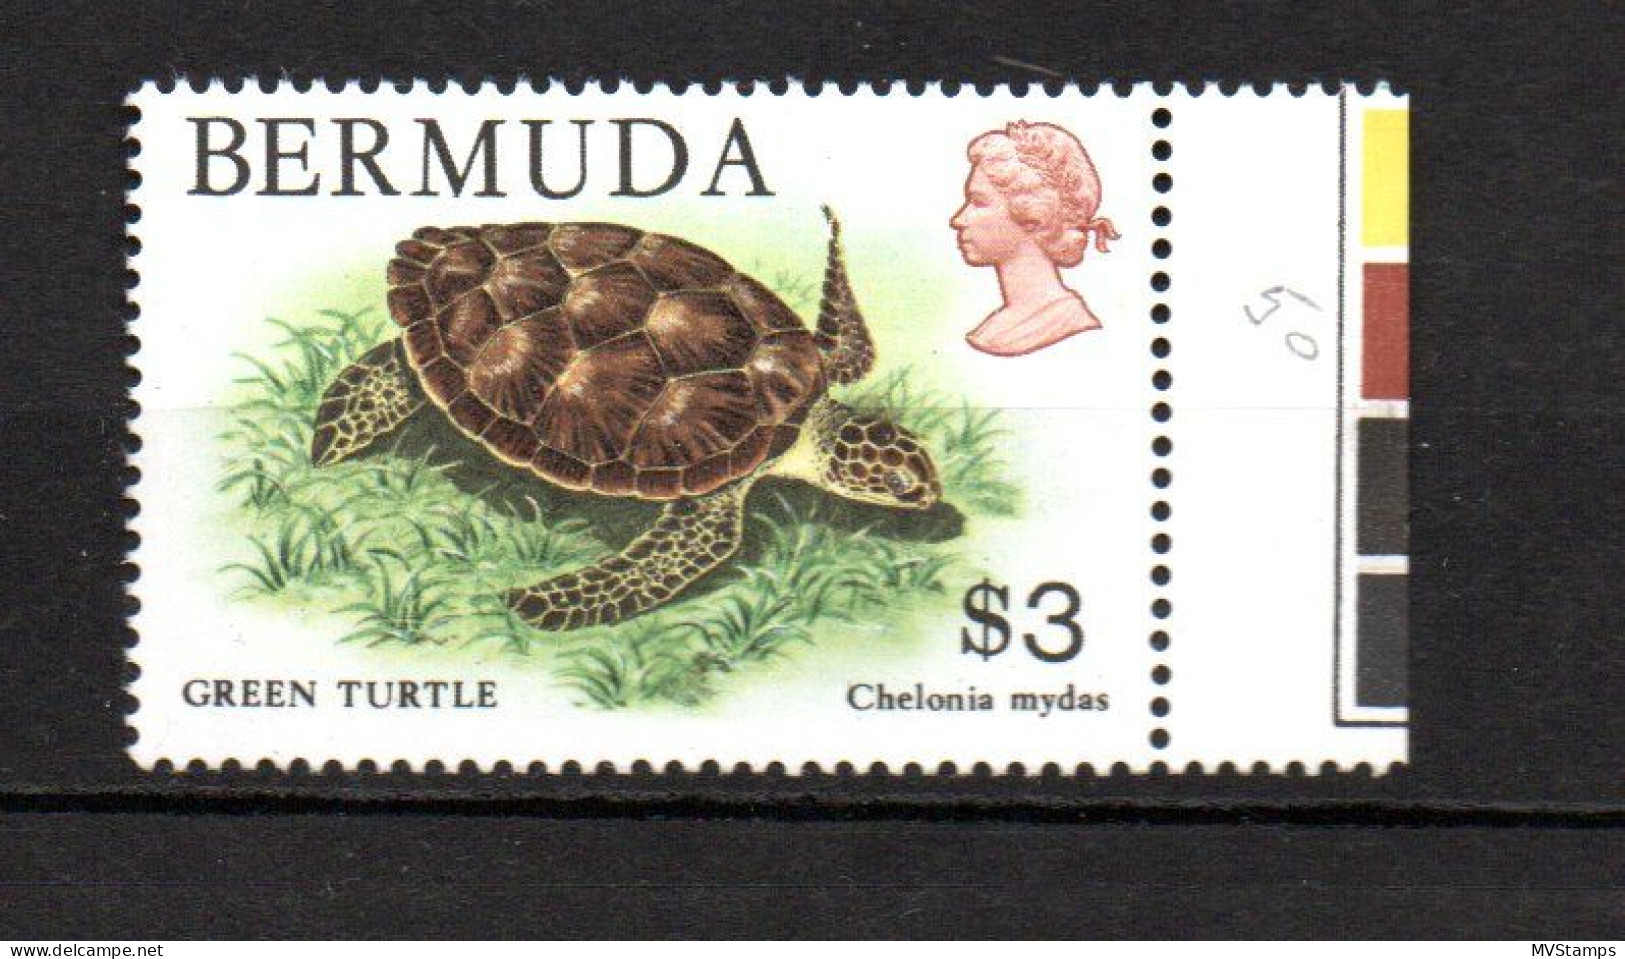 Bermuda 1979 Definitive $3.00 Turtle Stamps (Michel 367) MNH - Bermuda